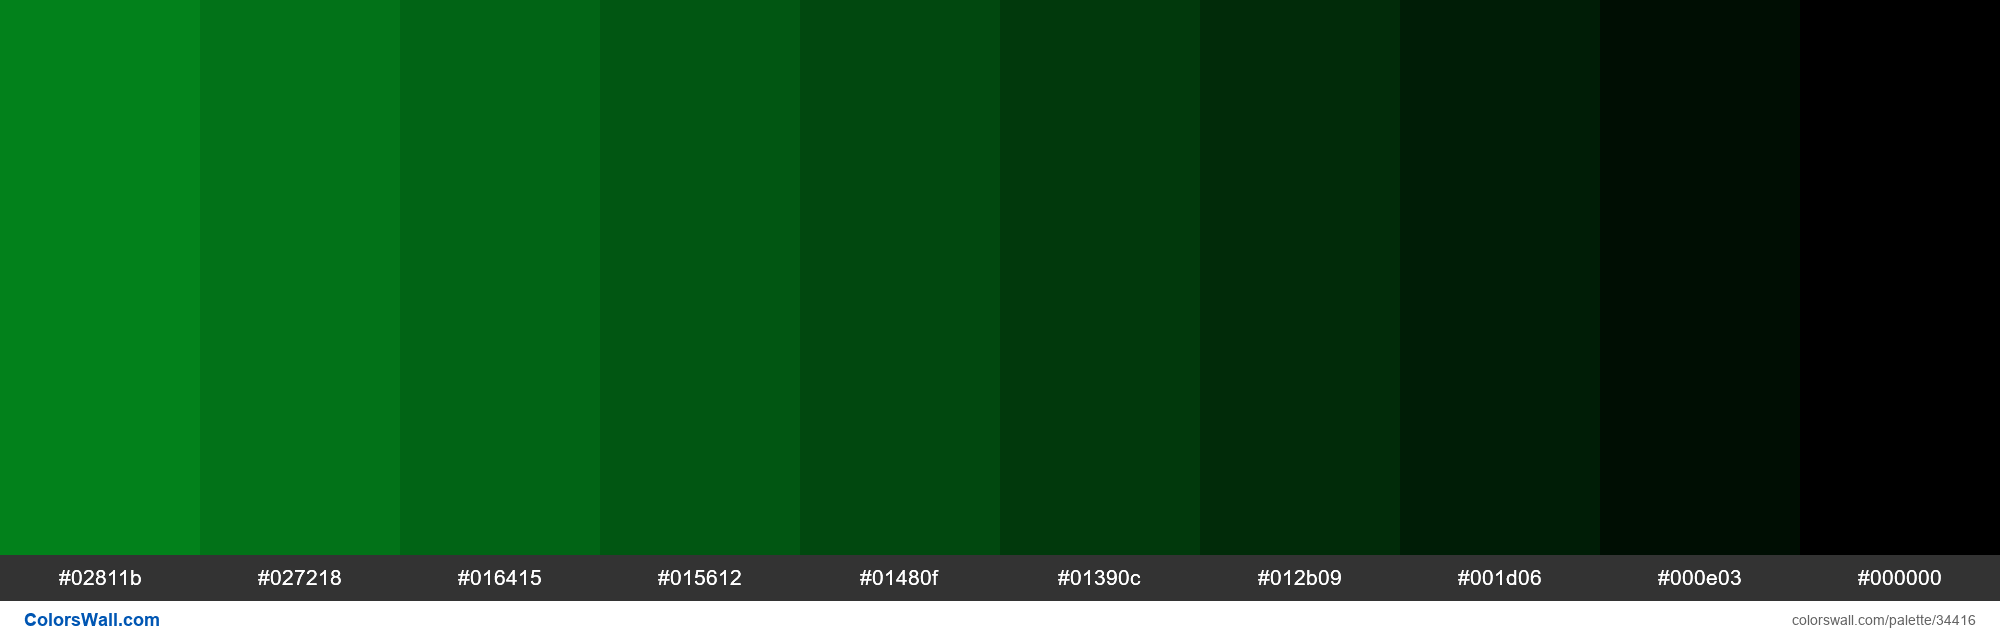 Shades Xkcd Color Emerald Green 028f1e Hex Hex Rgb Codes